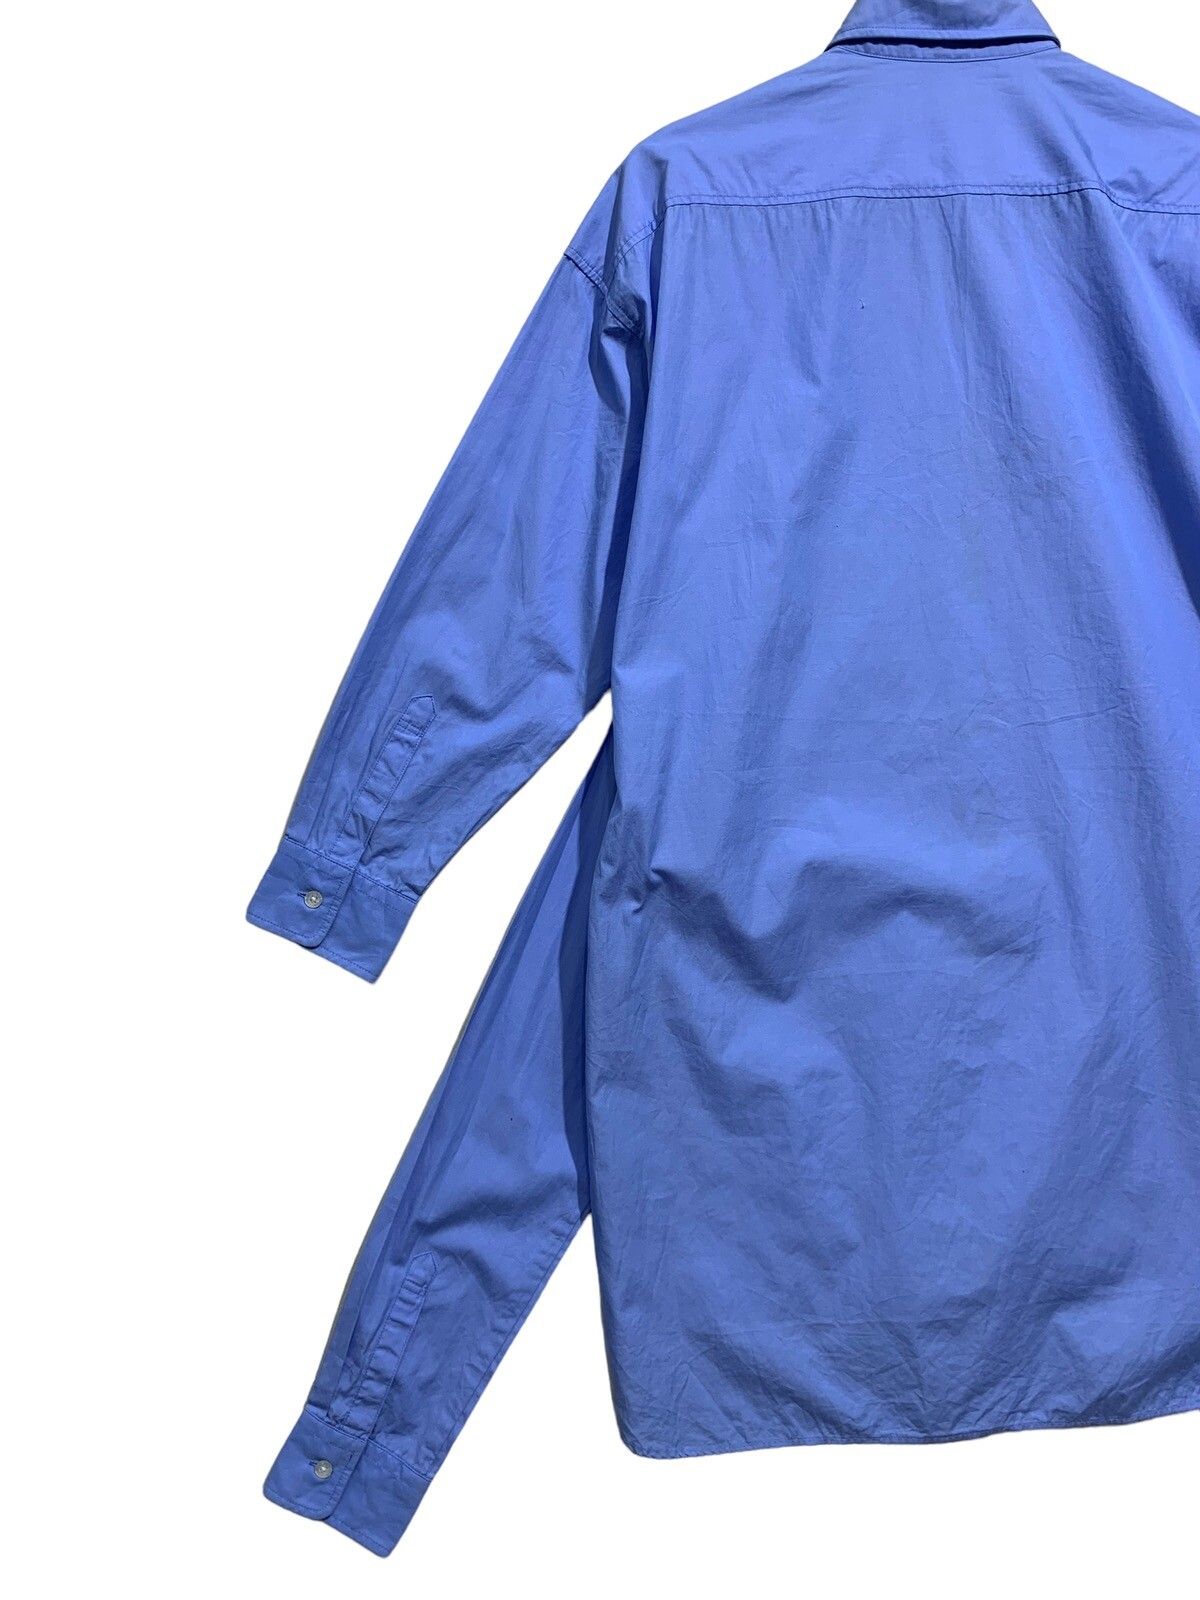 Multi Sleeve Button Up Shirt - 6